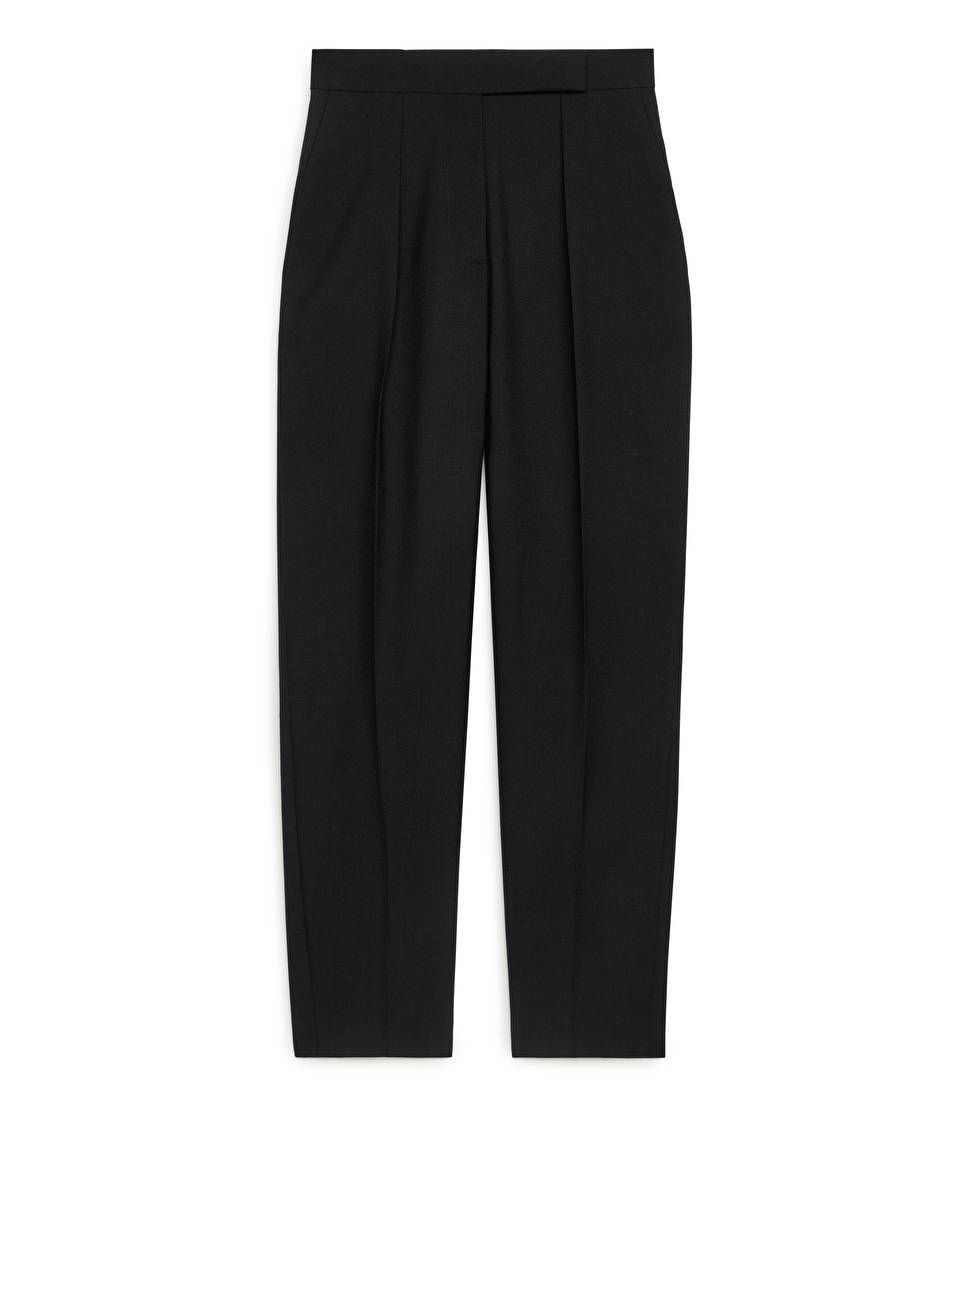 Tailored Wool Trousers - Black - Trousers - ARKET GB | ARKET